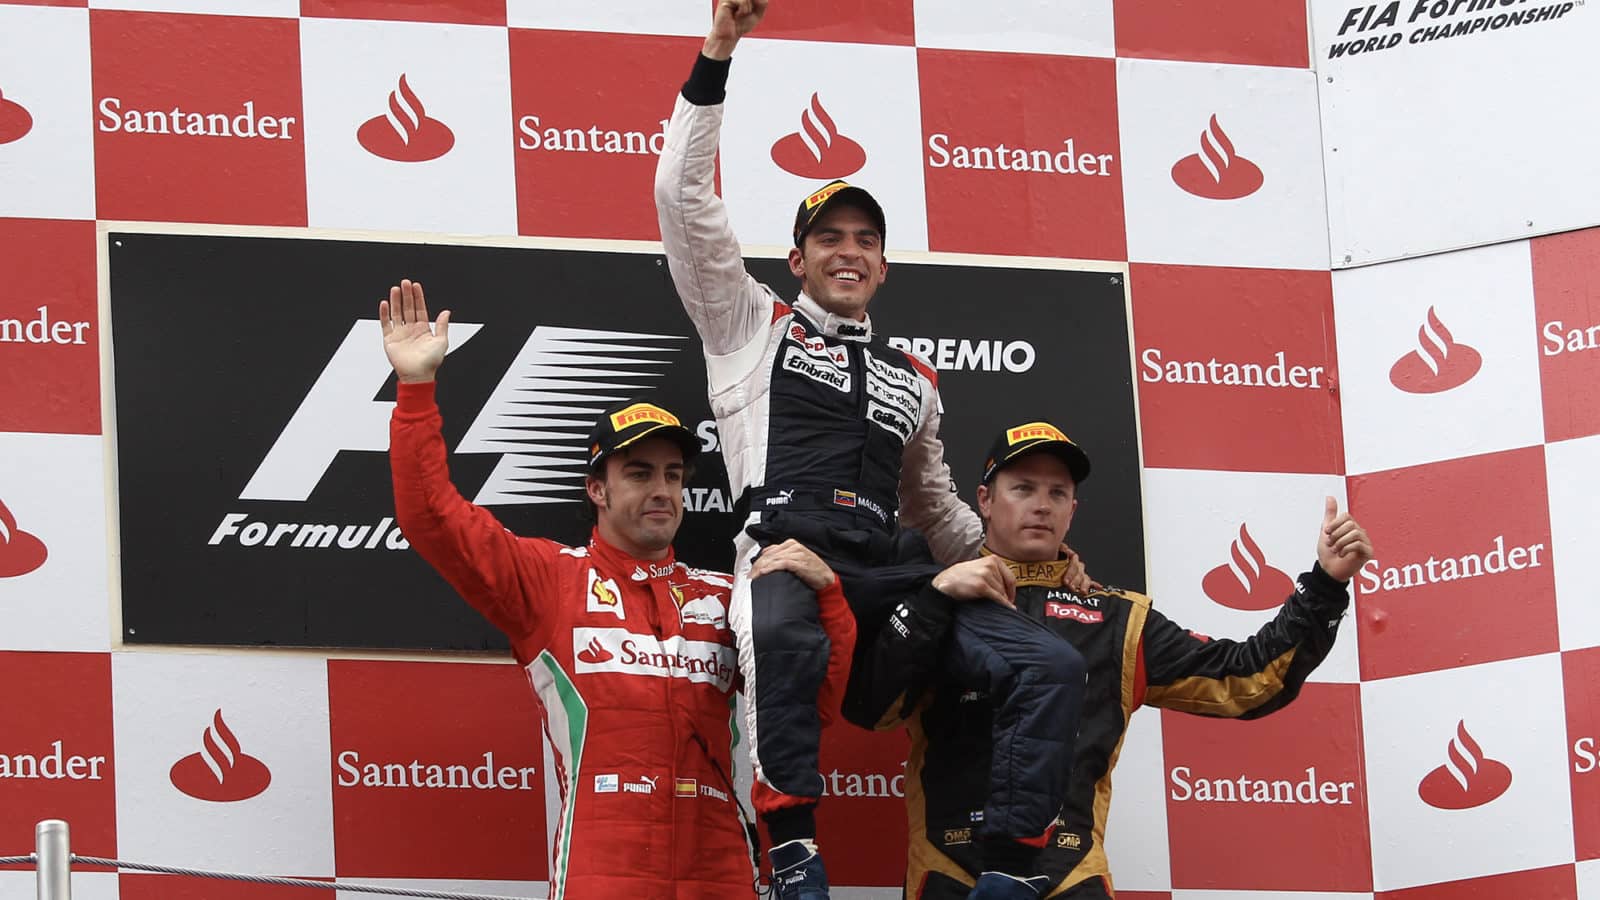 Pastor Maldonado celebrates victory in the 2012 F1 Spanish Grand Prix